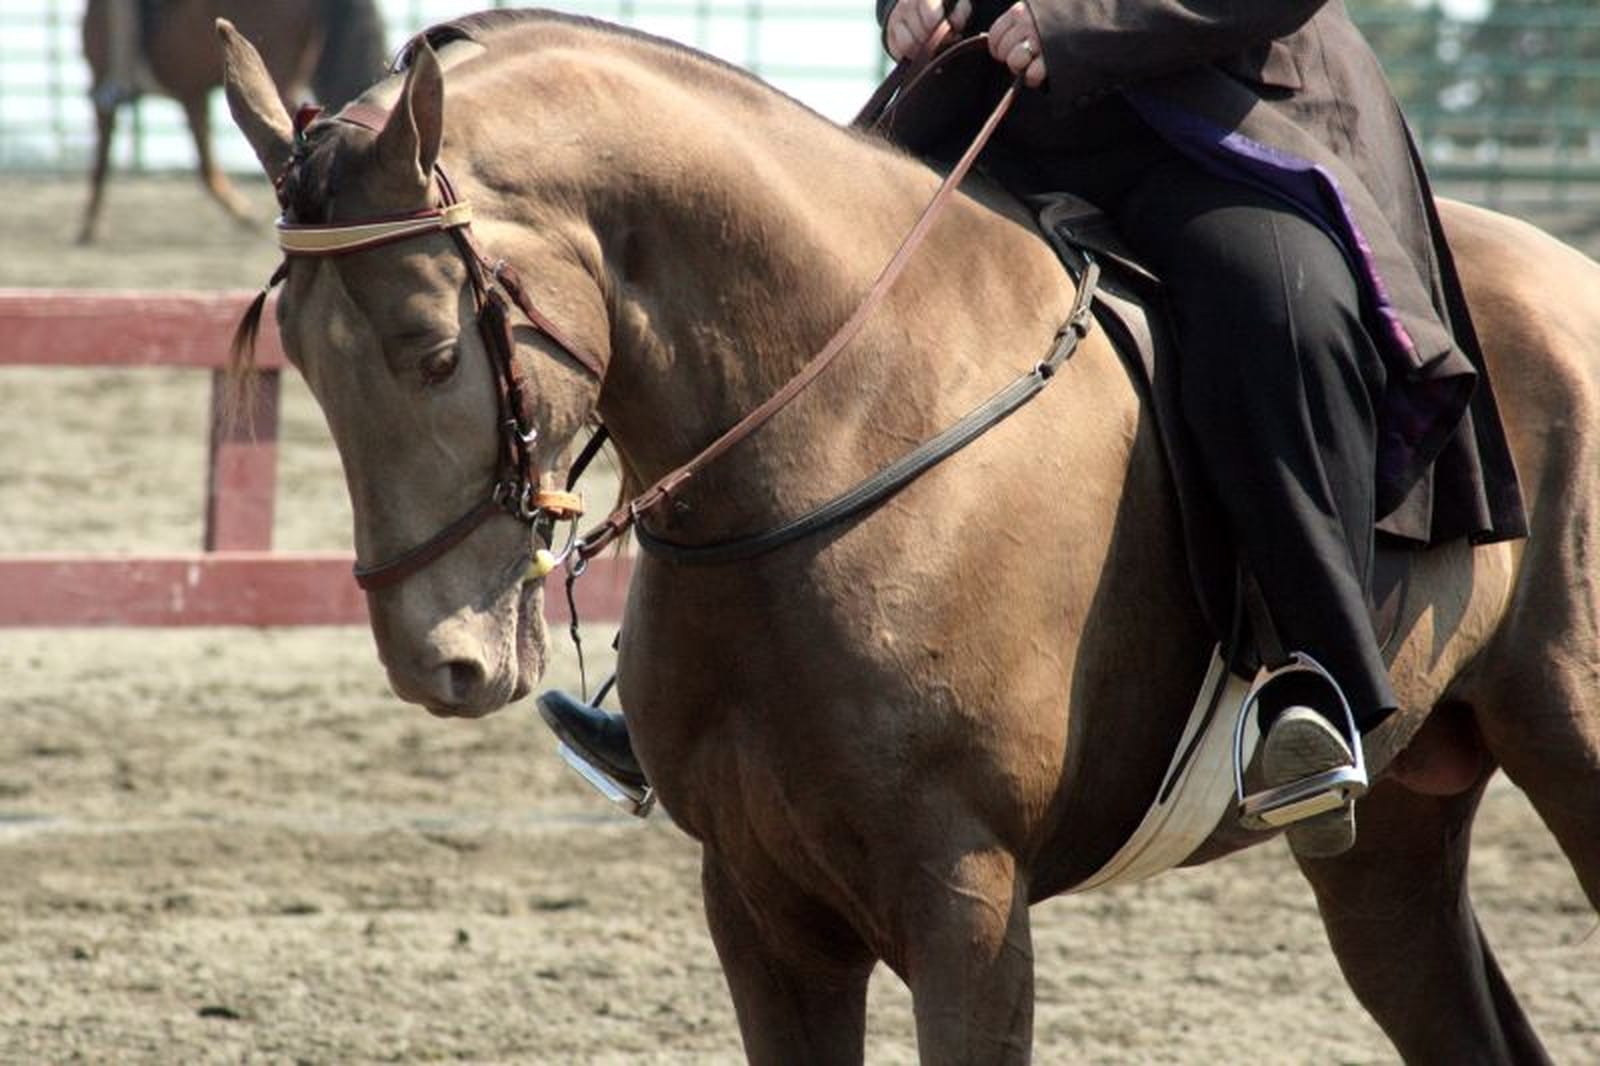 EXPOSED! Tennessee Walking Horse Celebration: Celebrating Cruelty?